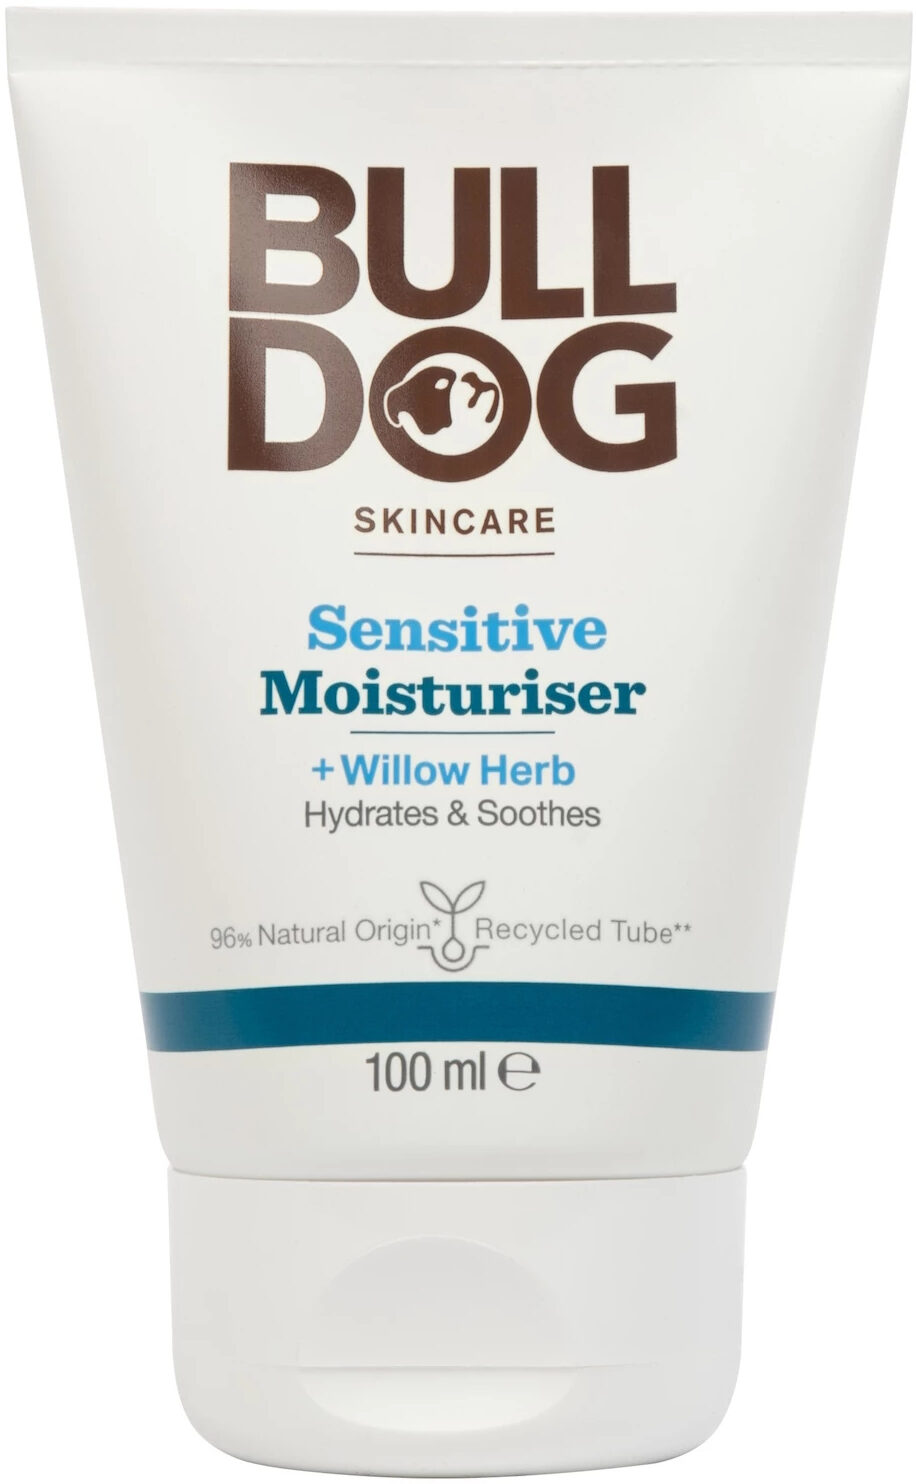 Sensitive moisturiser - Produkt - en